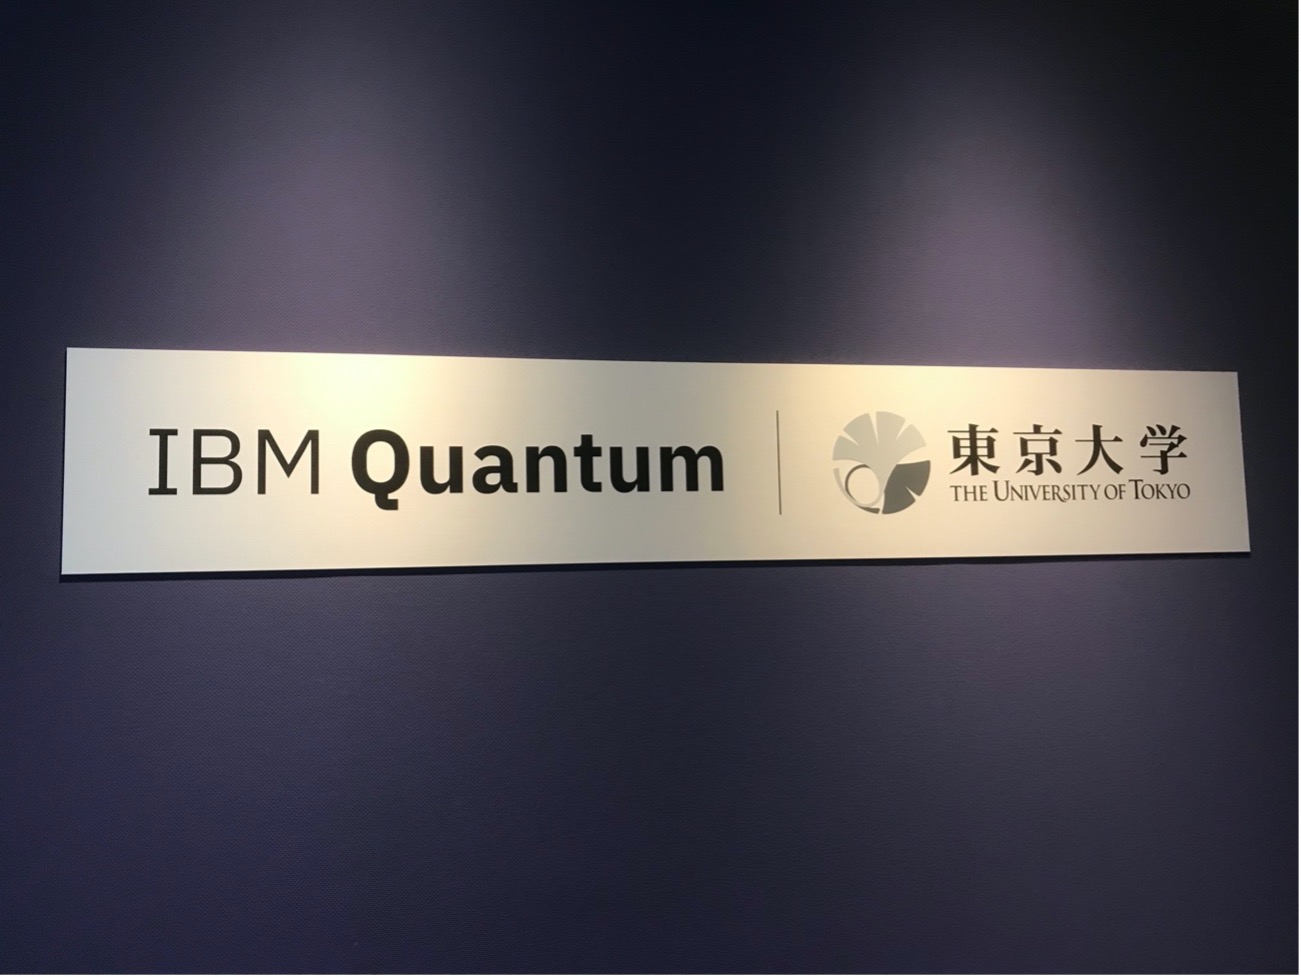 The University of Tokyo – IBM Quantum Hardware Test Center